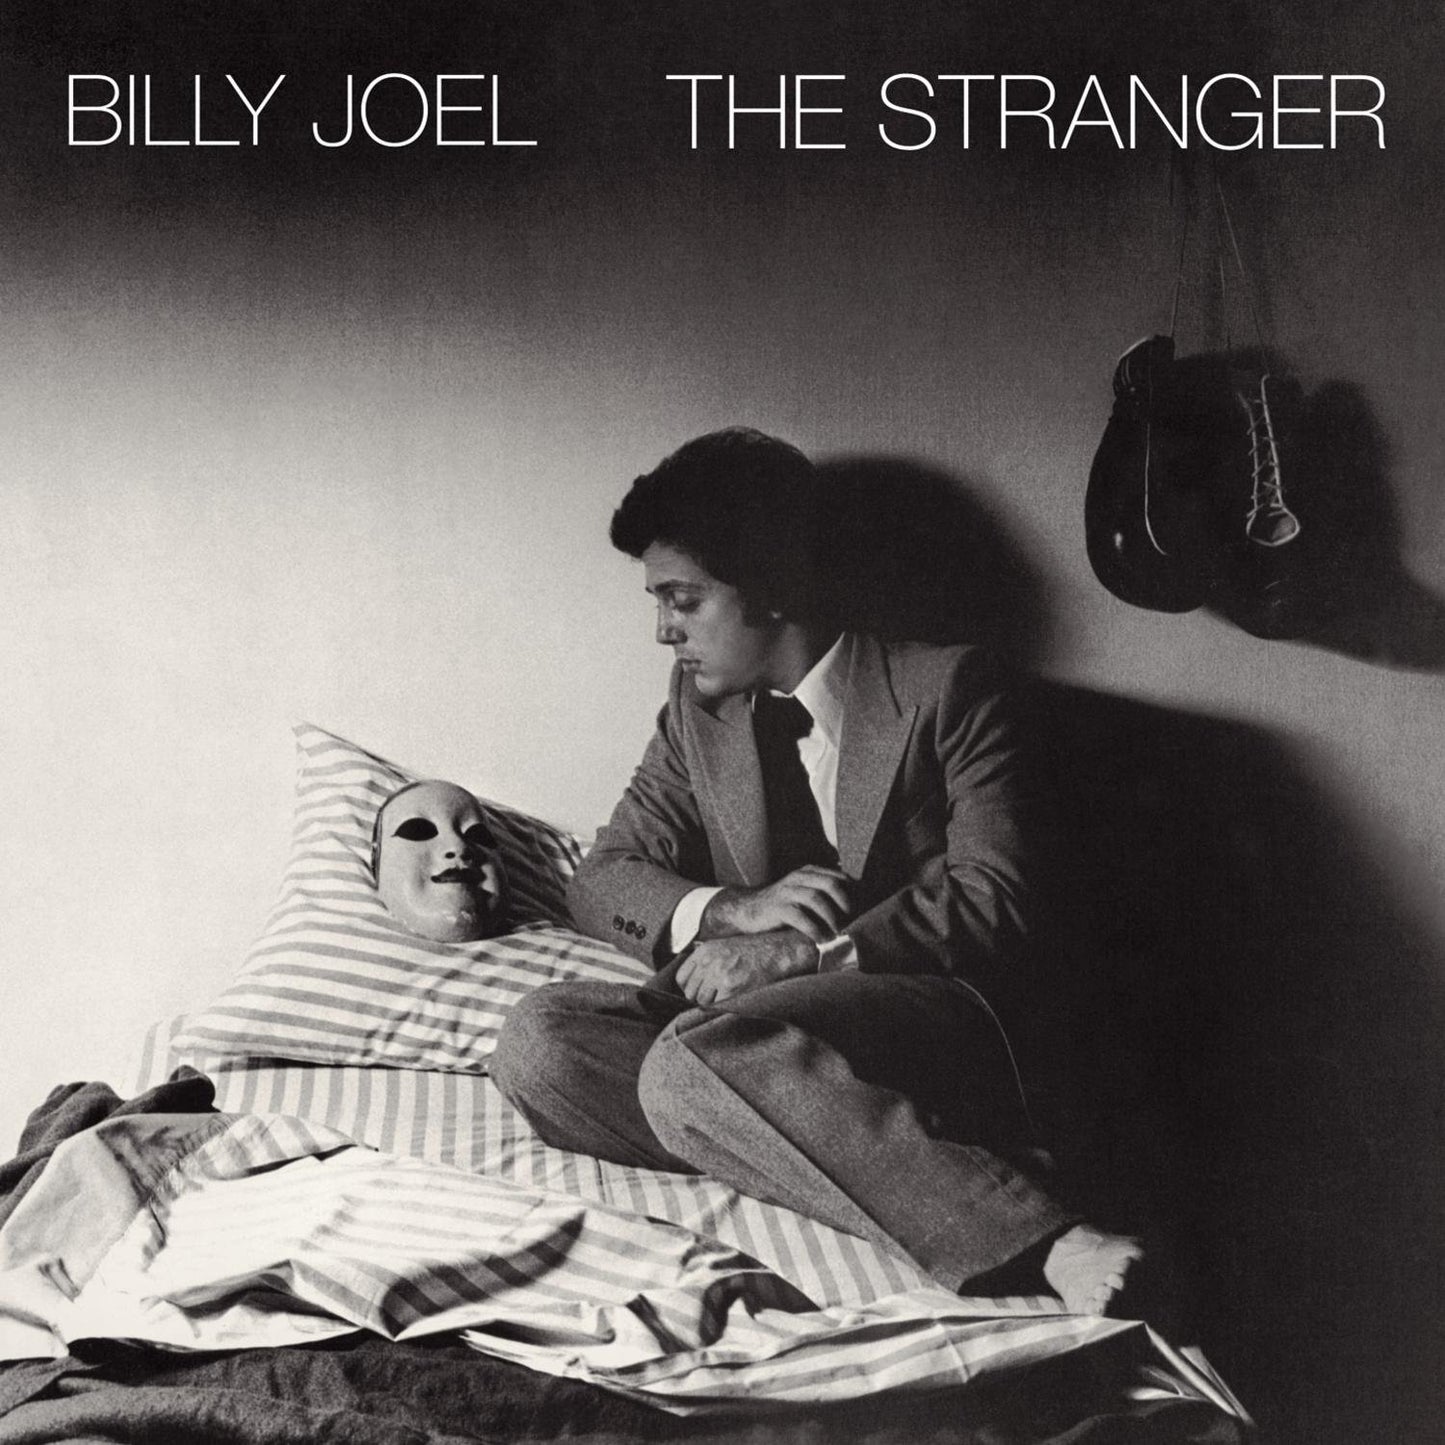 BILLY JOEL - THE STRANGER - 30TH ANNIVERSARY EDITION - VINYL LP